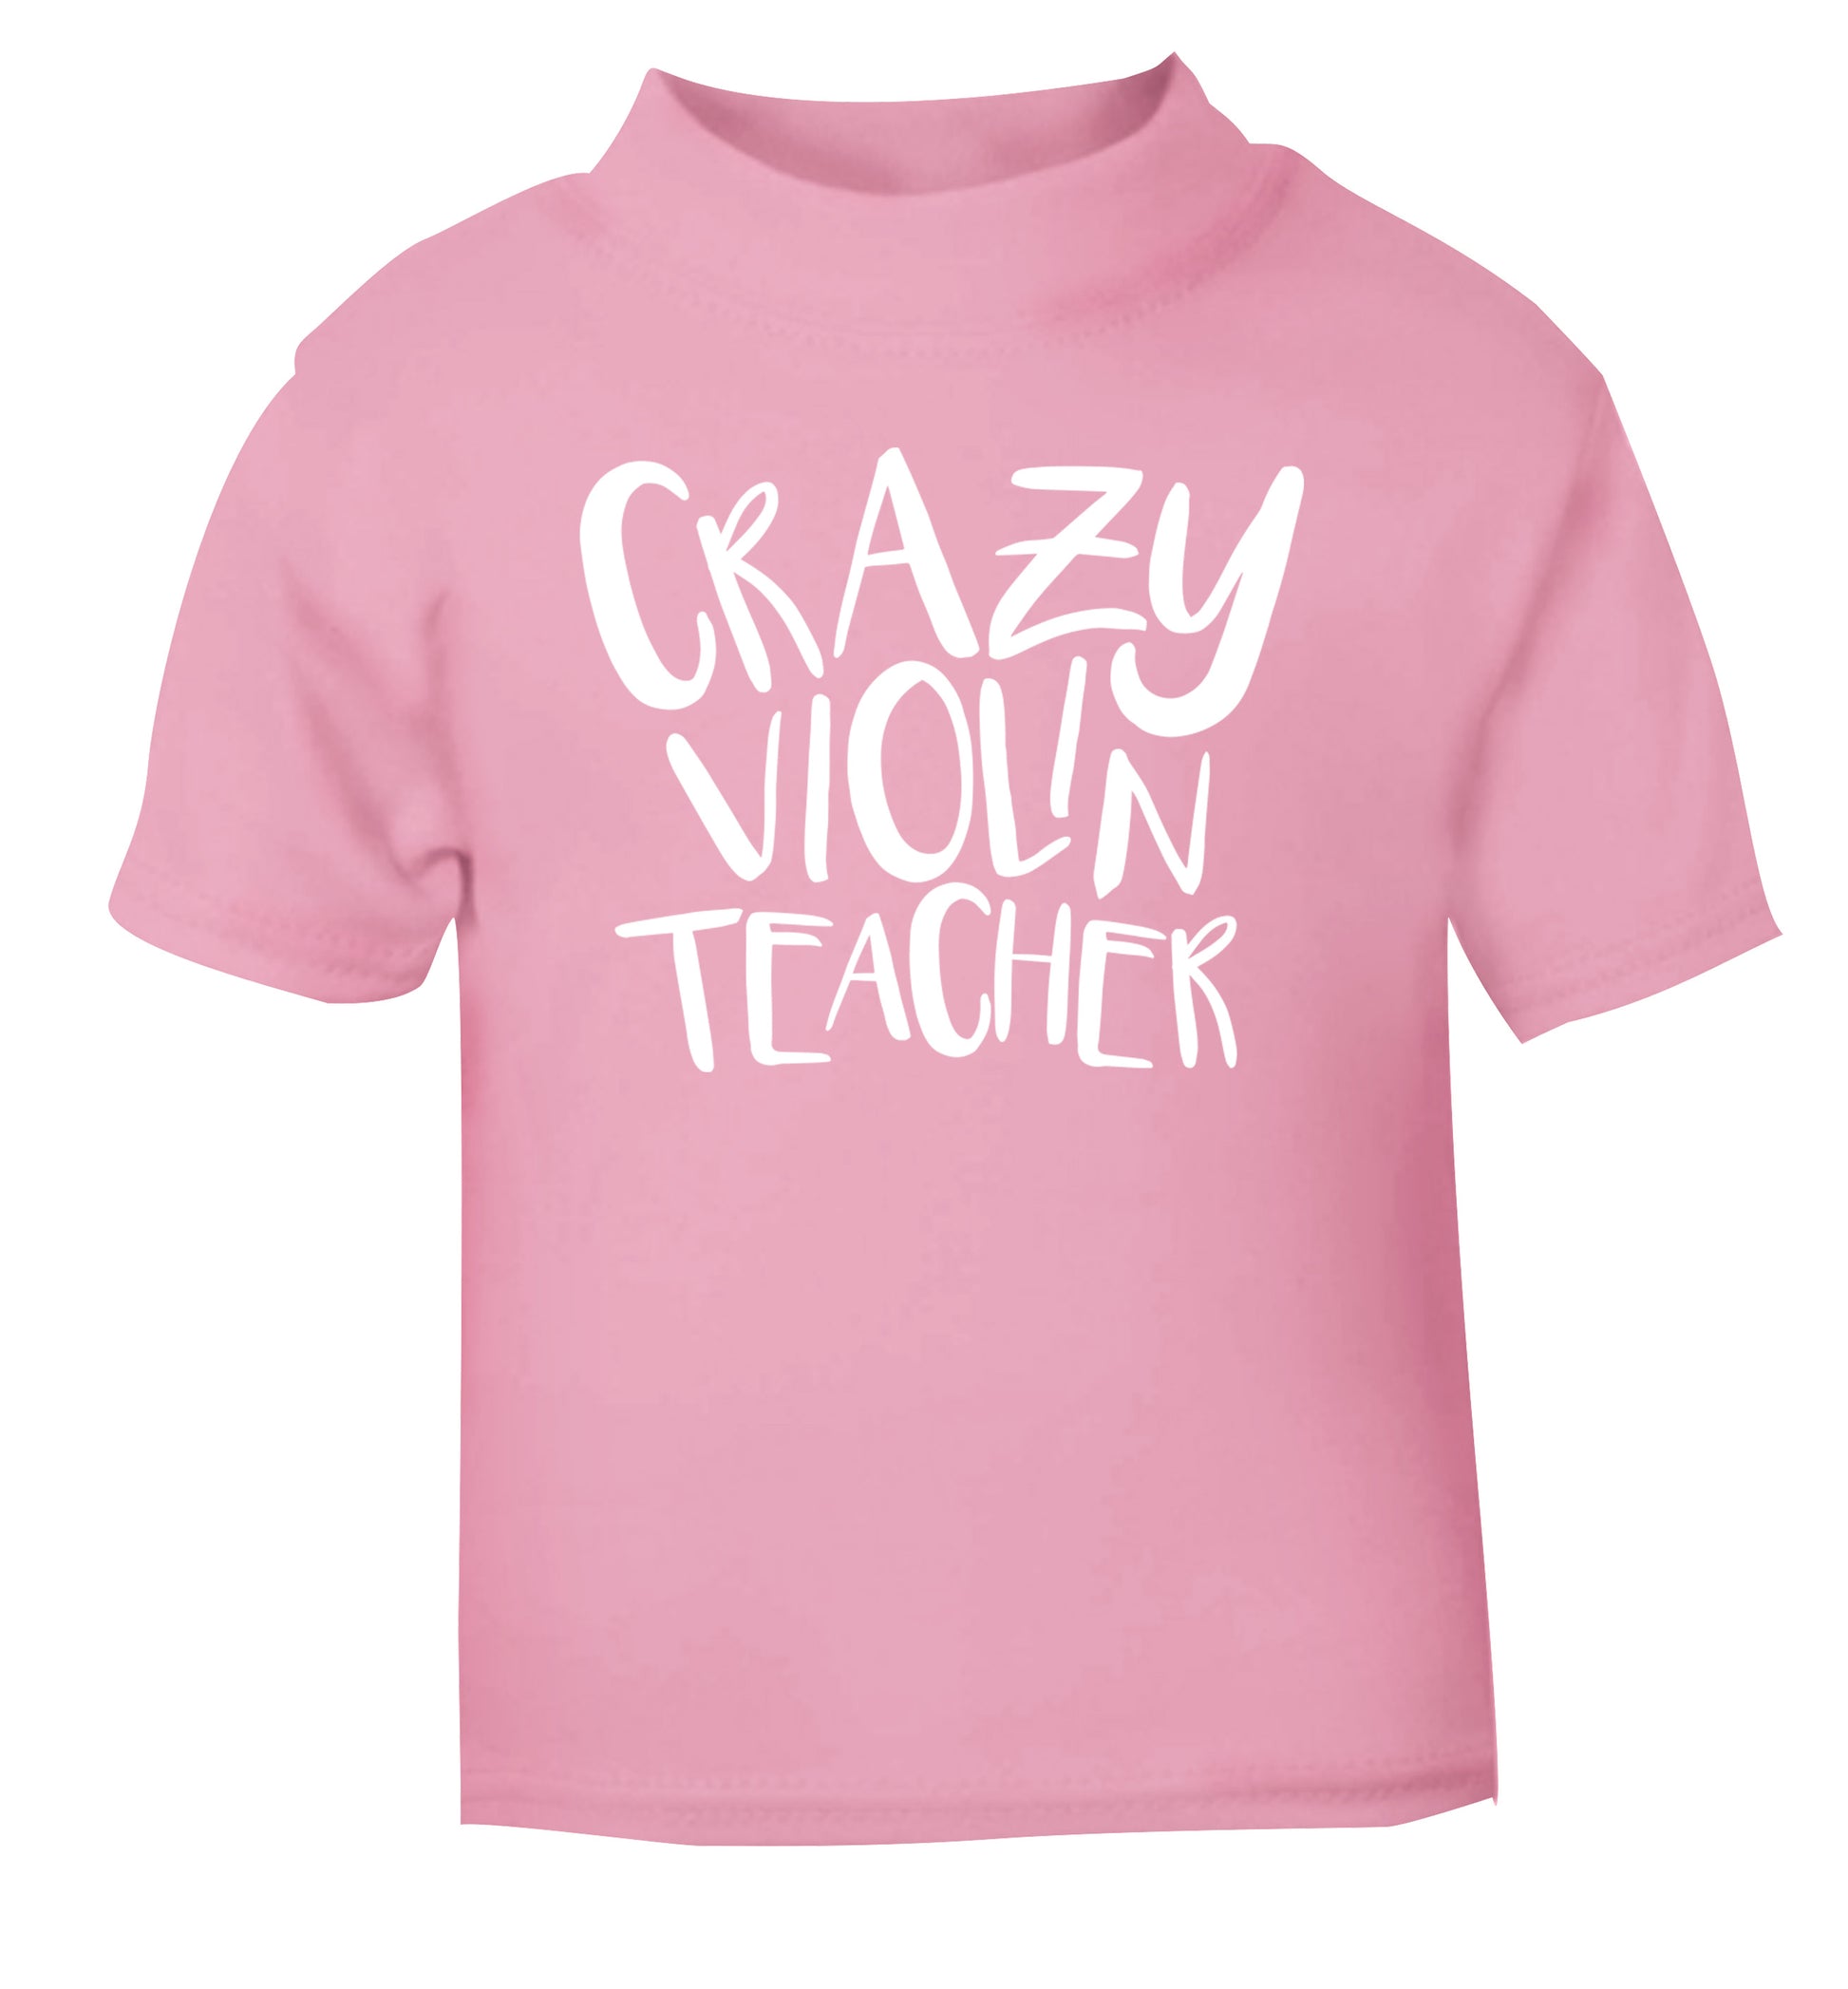 Crazy violin teacher light pink Baby Toddler Tshirt 2 Years